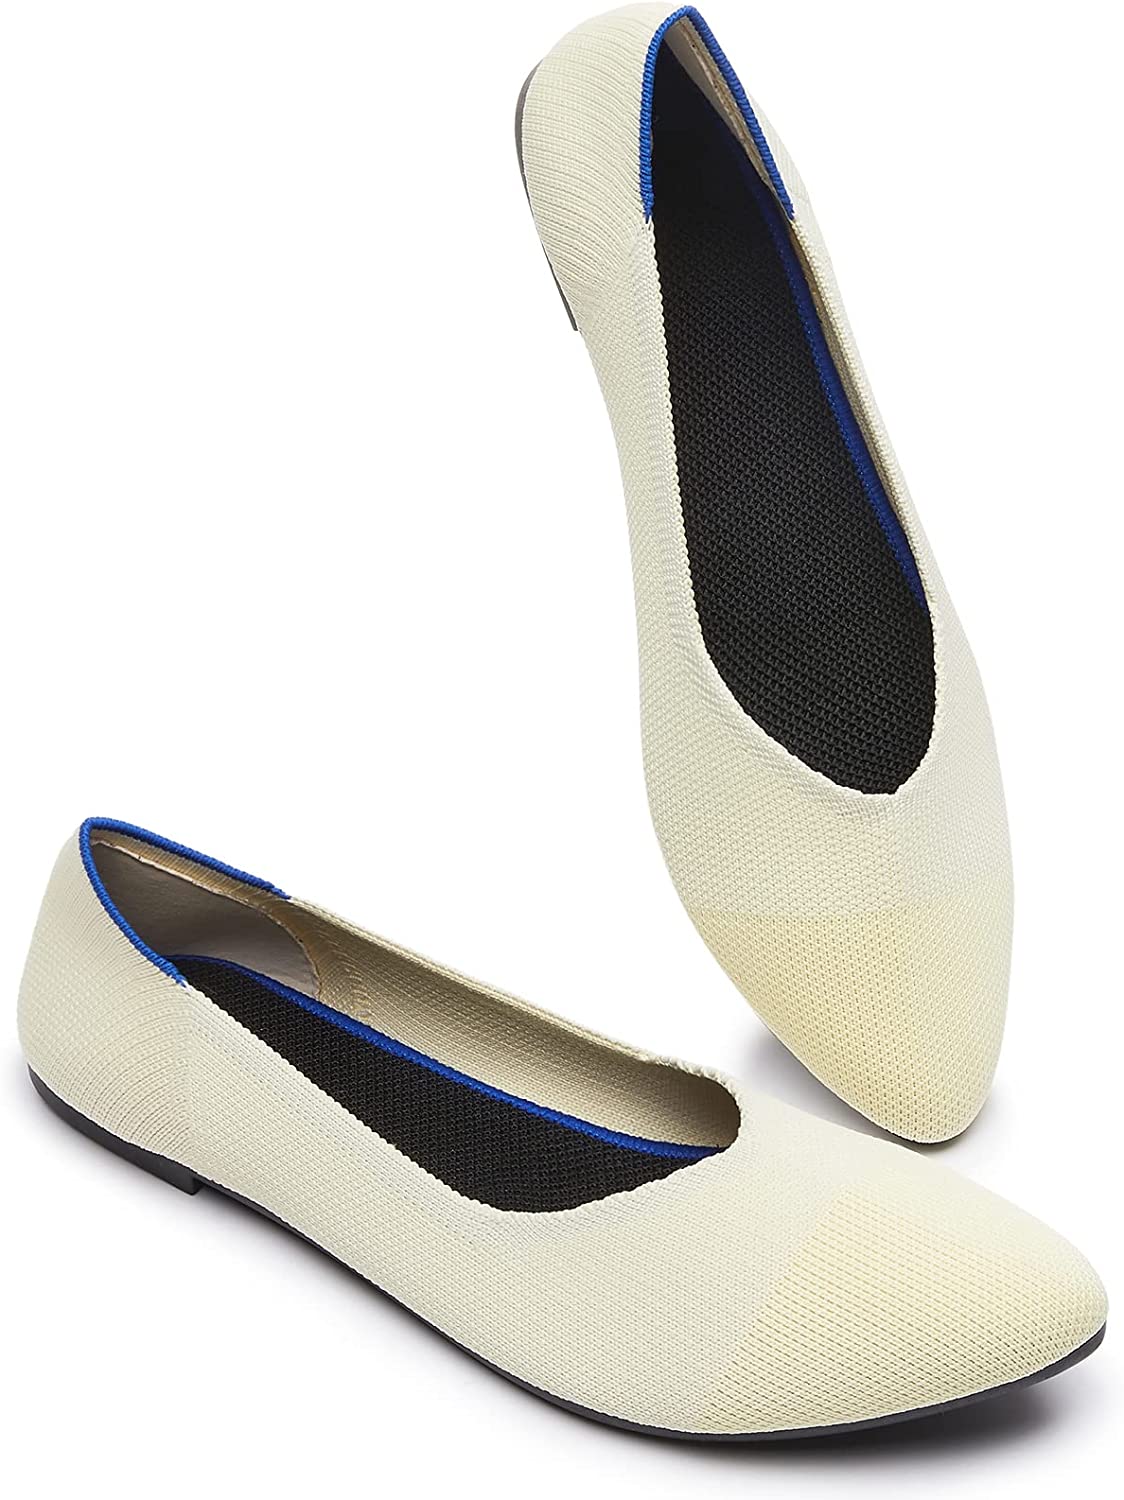 BABUDOG Women's Mesh Flats Shoes Pointed-Toe Dress Shoes for Women ...